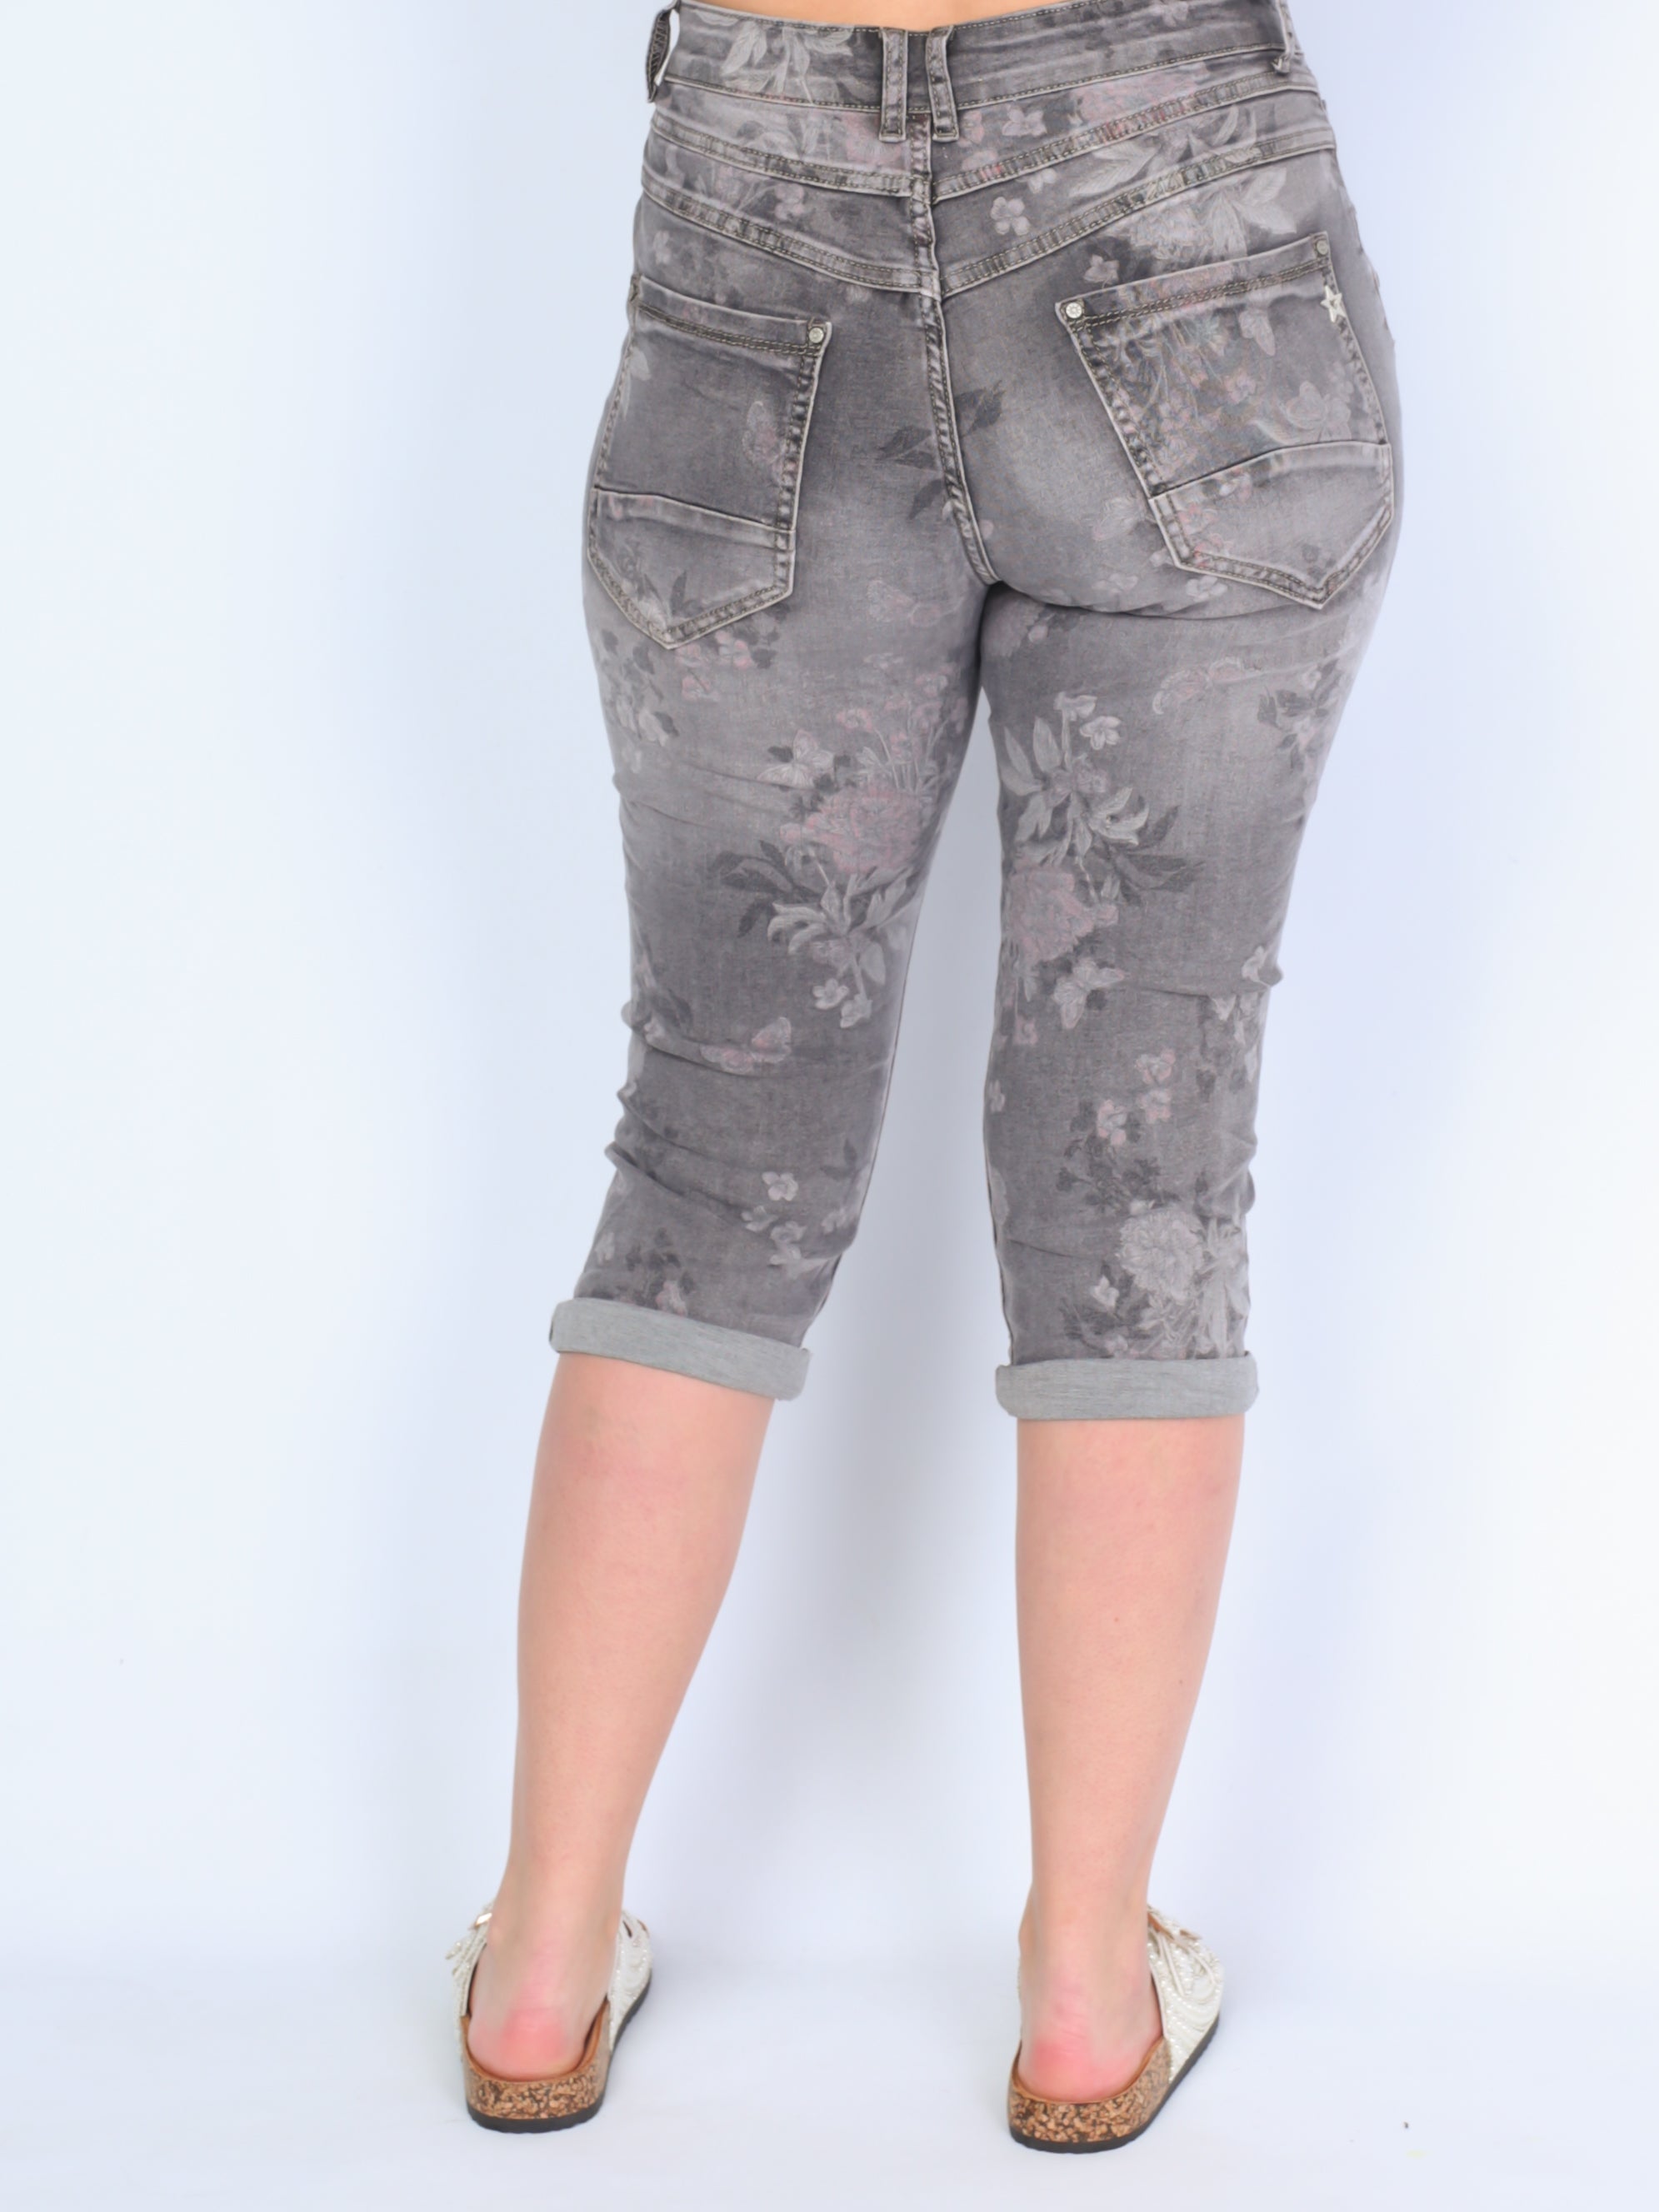 Karostar Jean Shorts with flower print grey